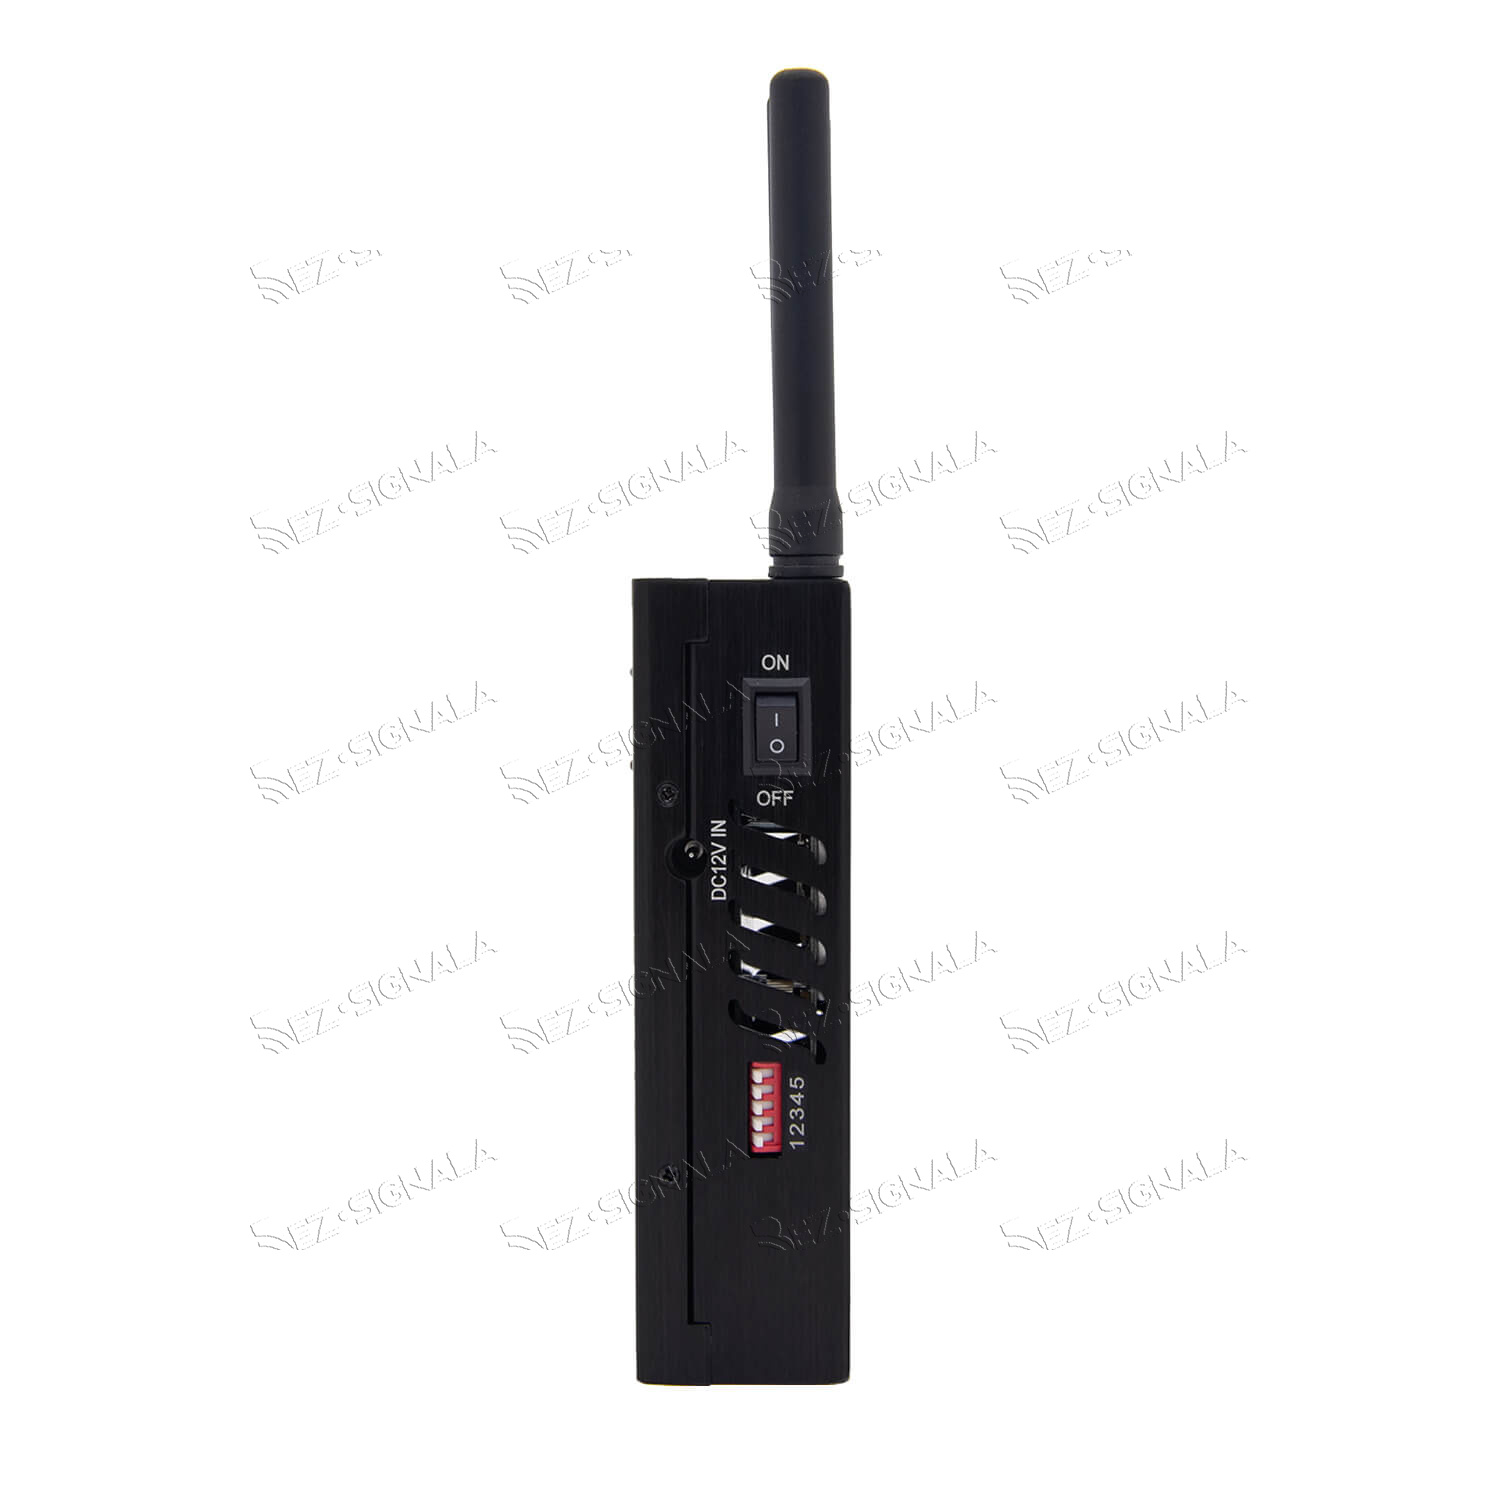 Глушилка EaglePro Торнадо (CDMA, GSM, DCS/PHS, 3G, GPS, WiFi, Глонасс) - 3